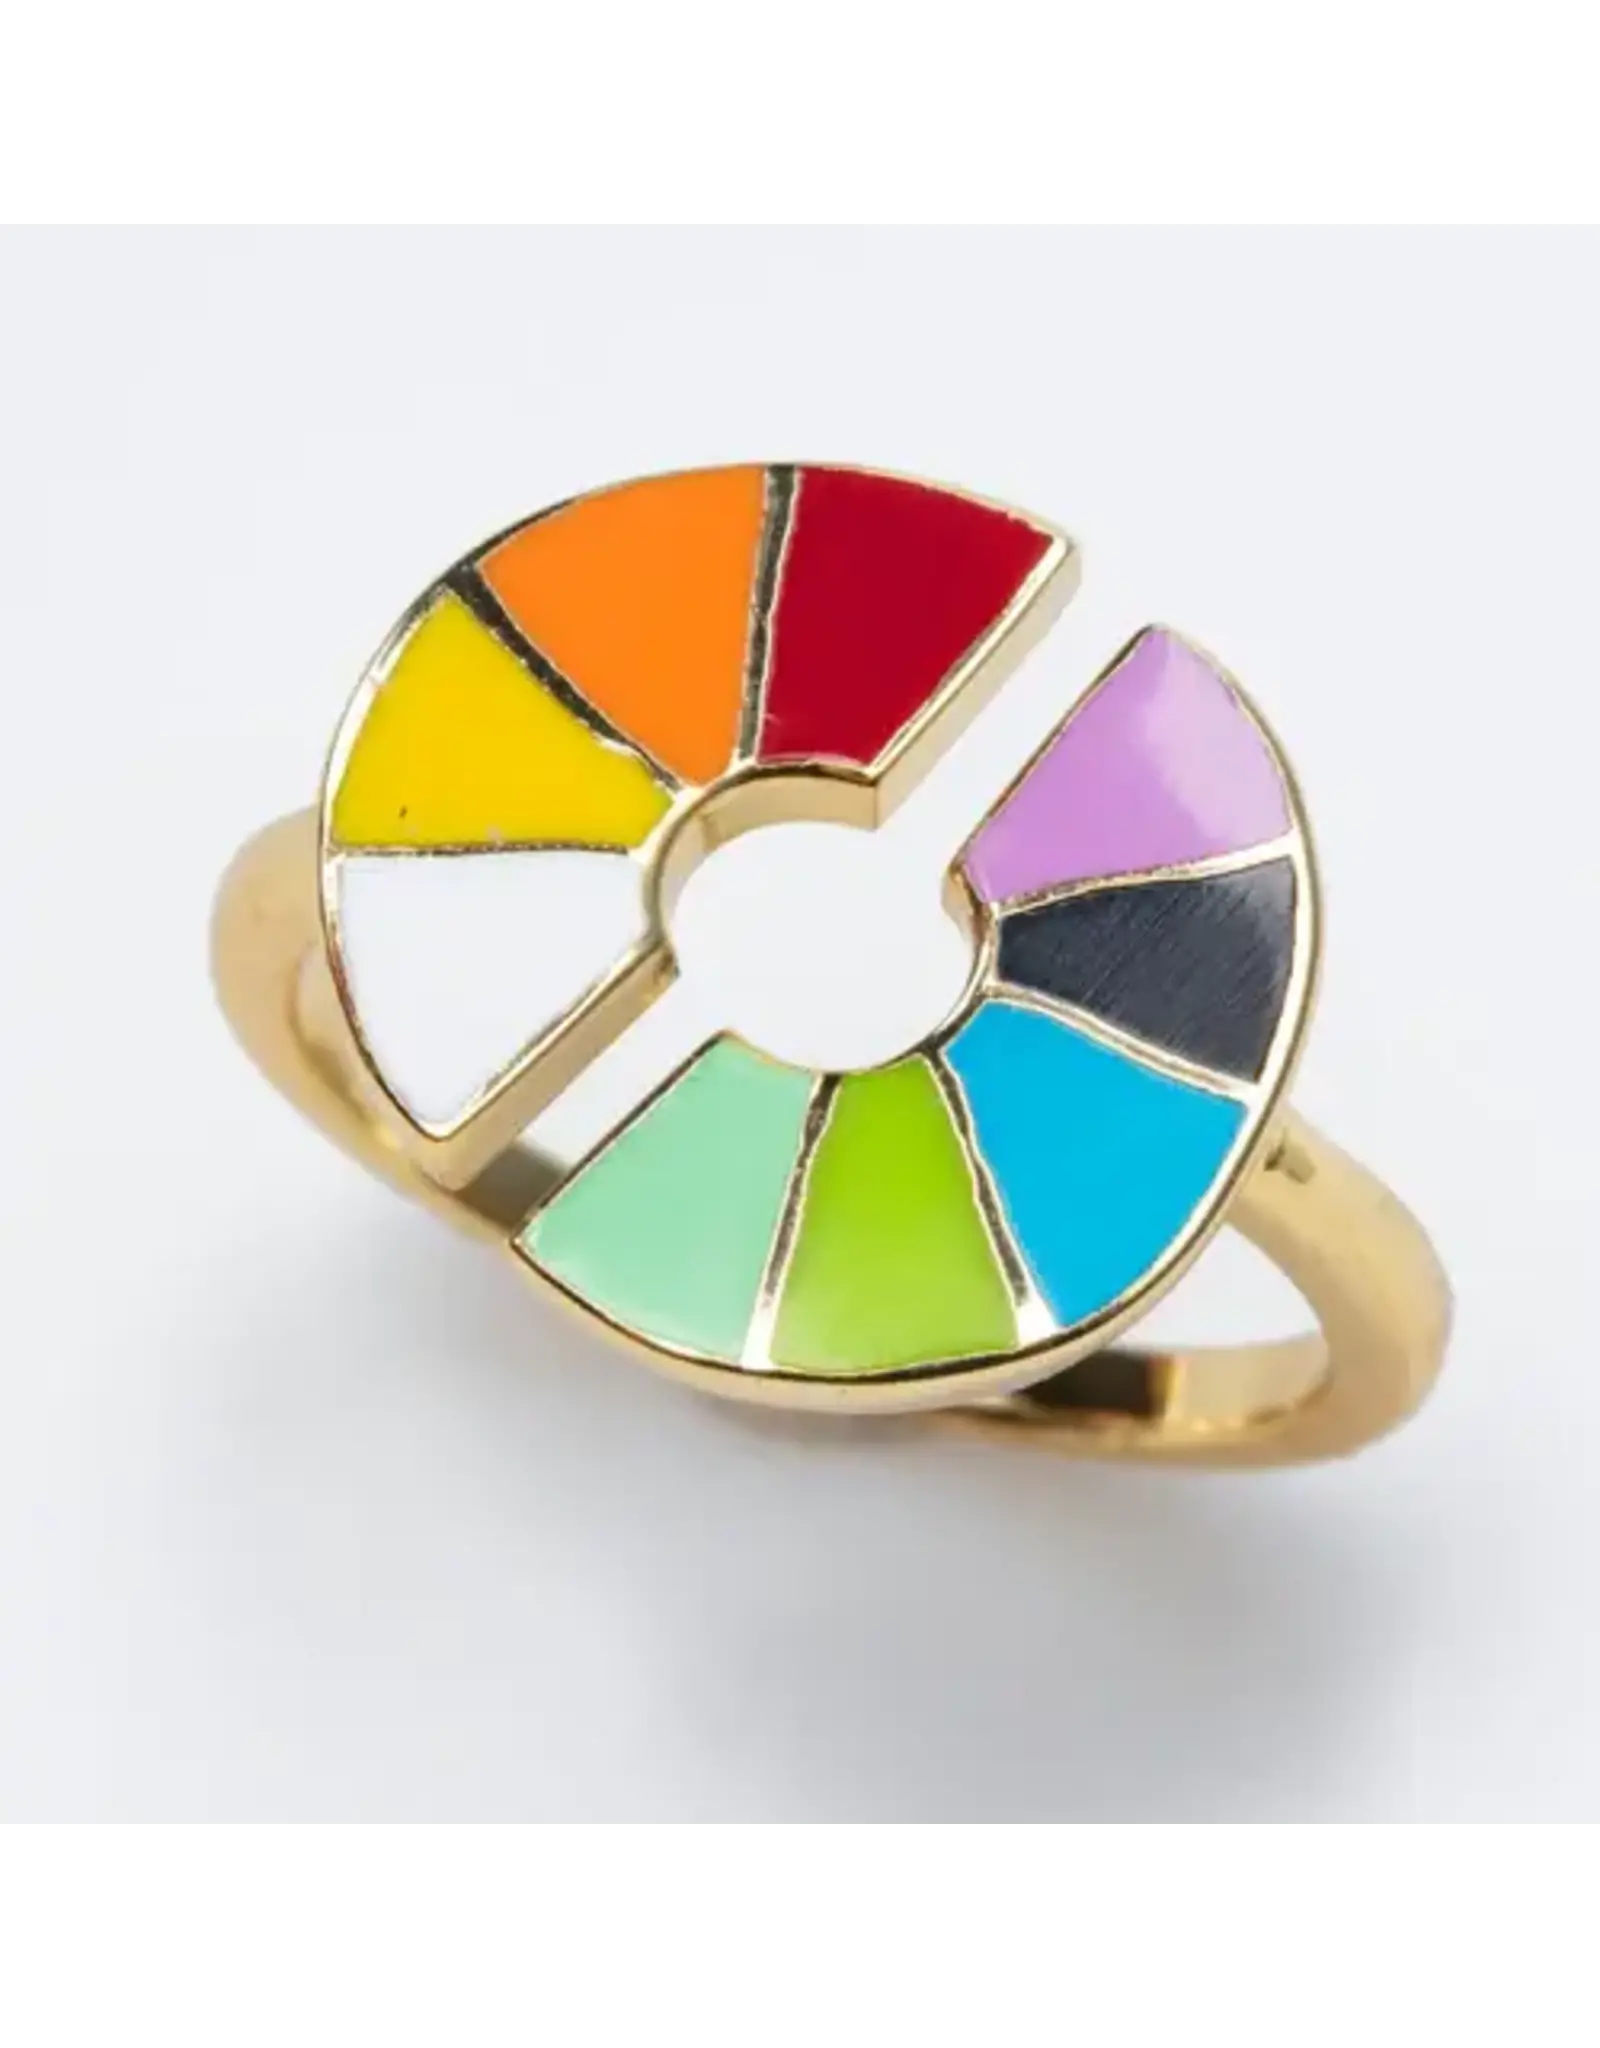 Adjustable Ring - Color Wheel